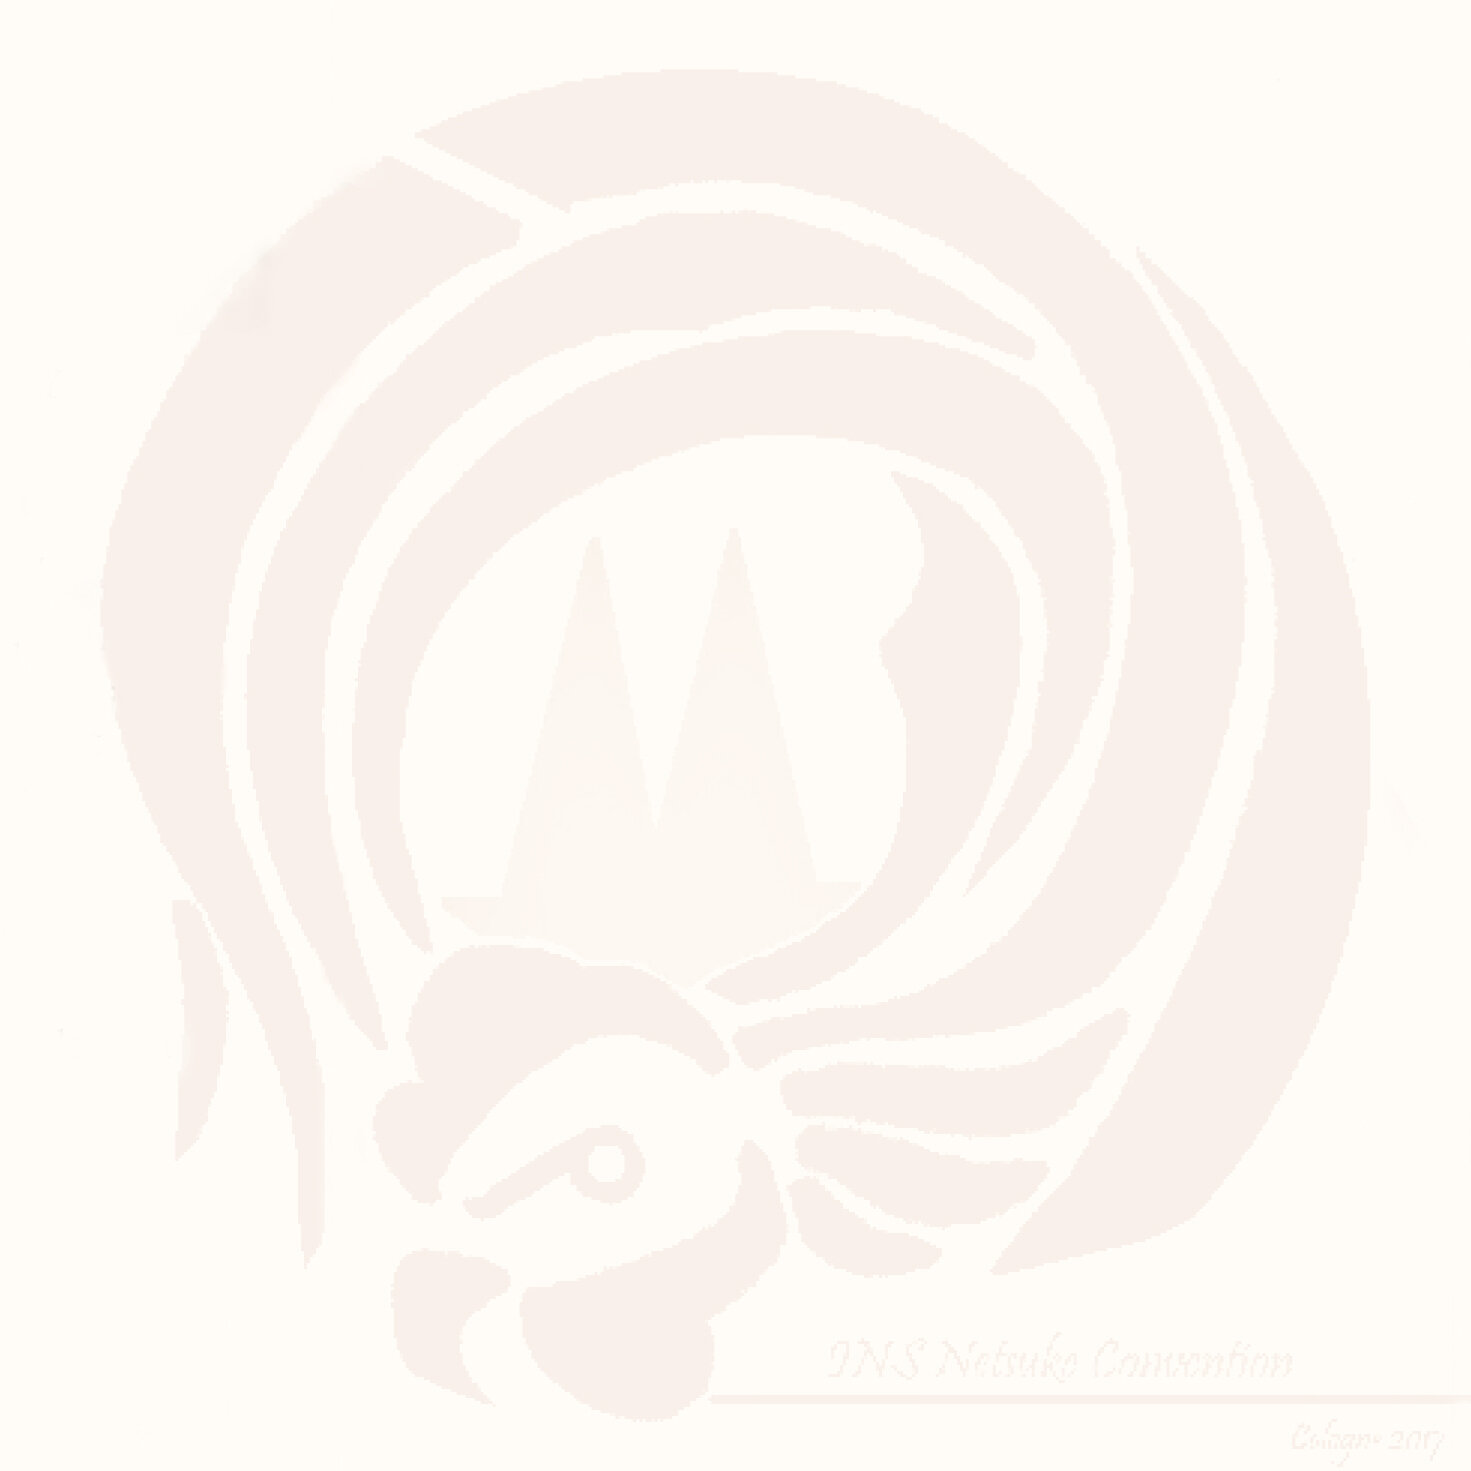 koln 2017 logo.jpg